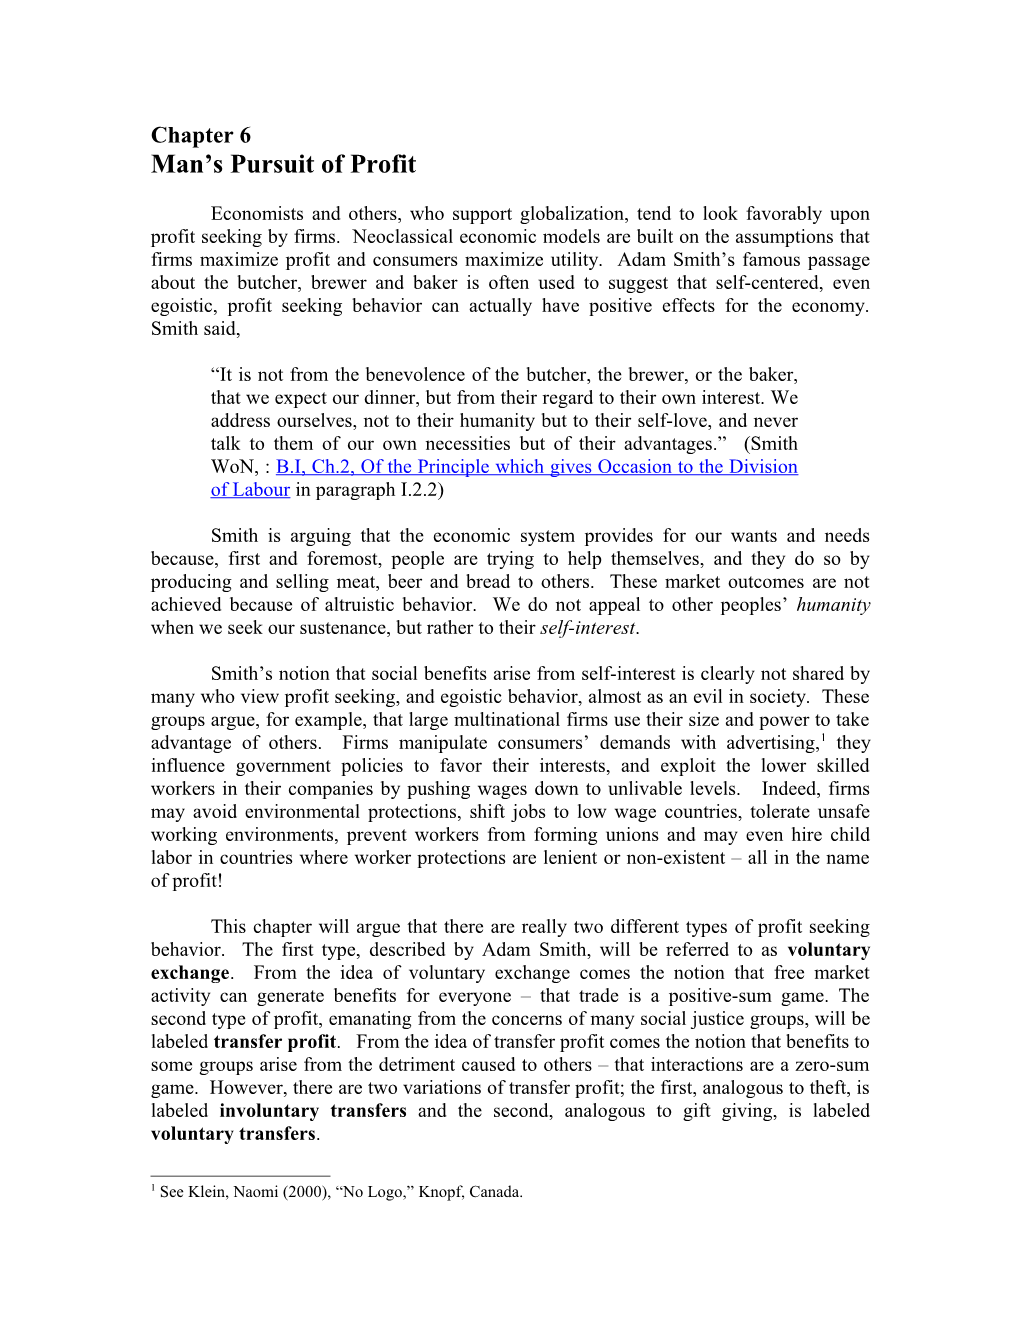 Chapter 7 - the Nature of Profit Seeking